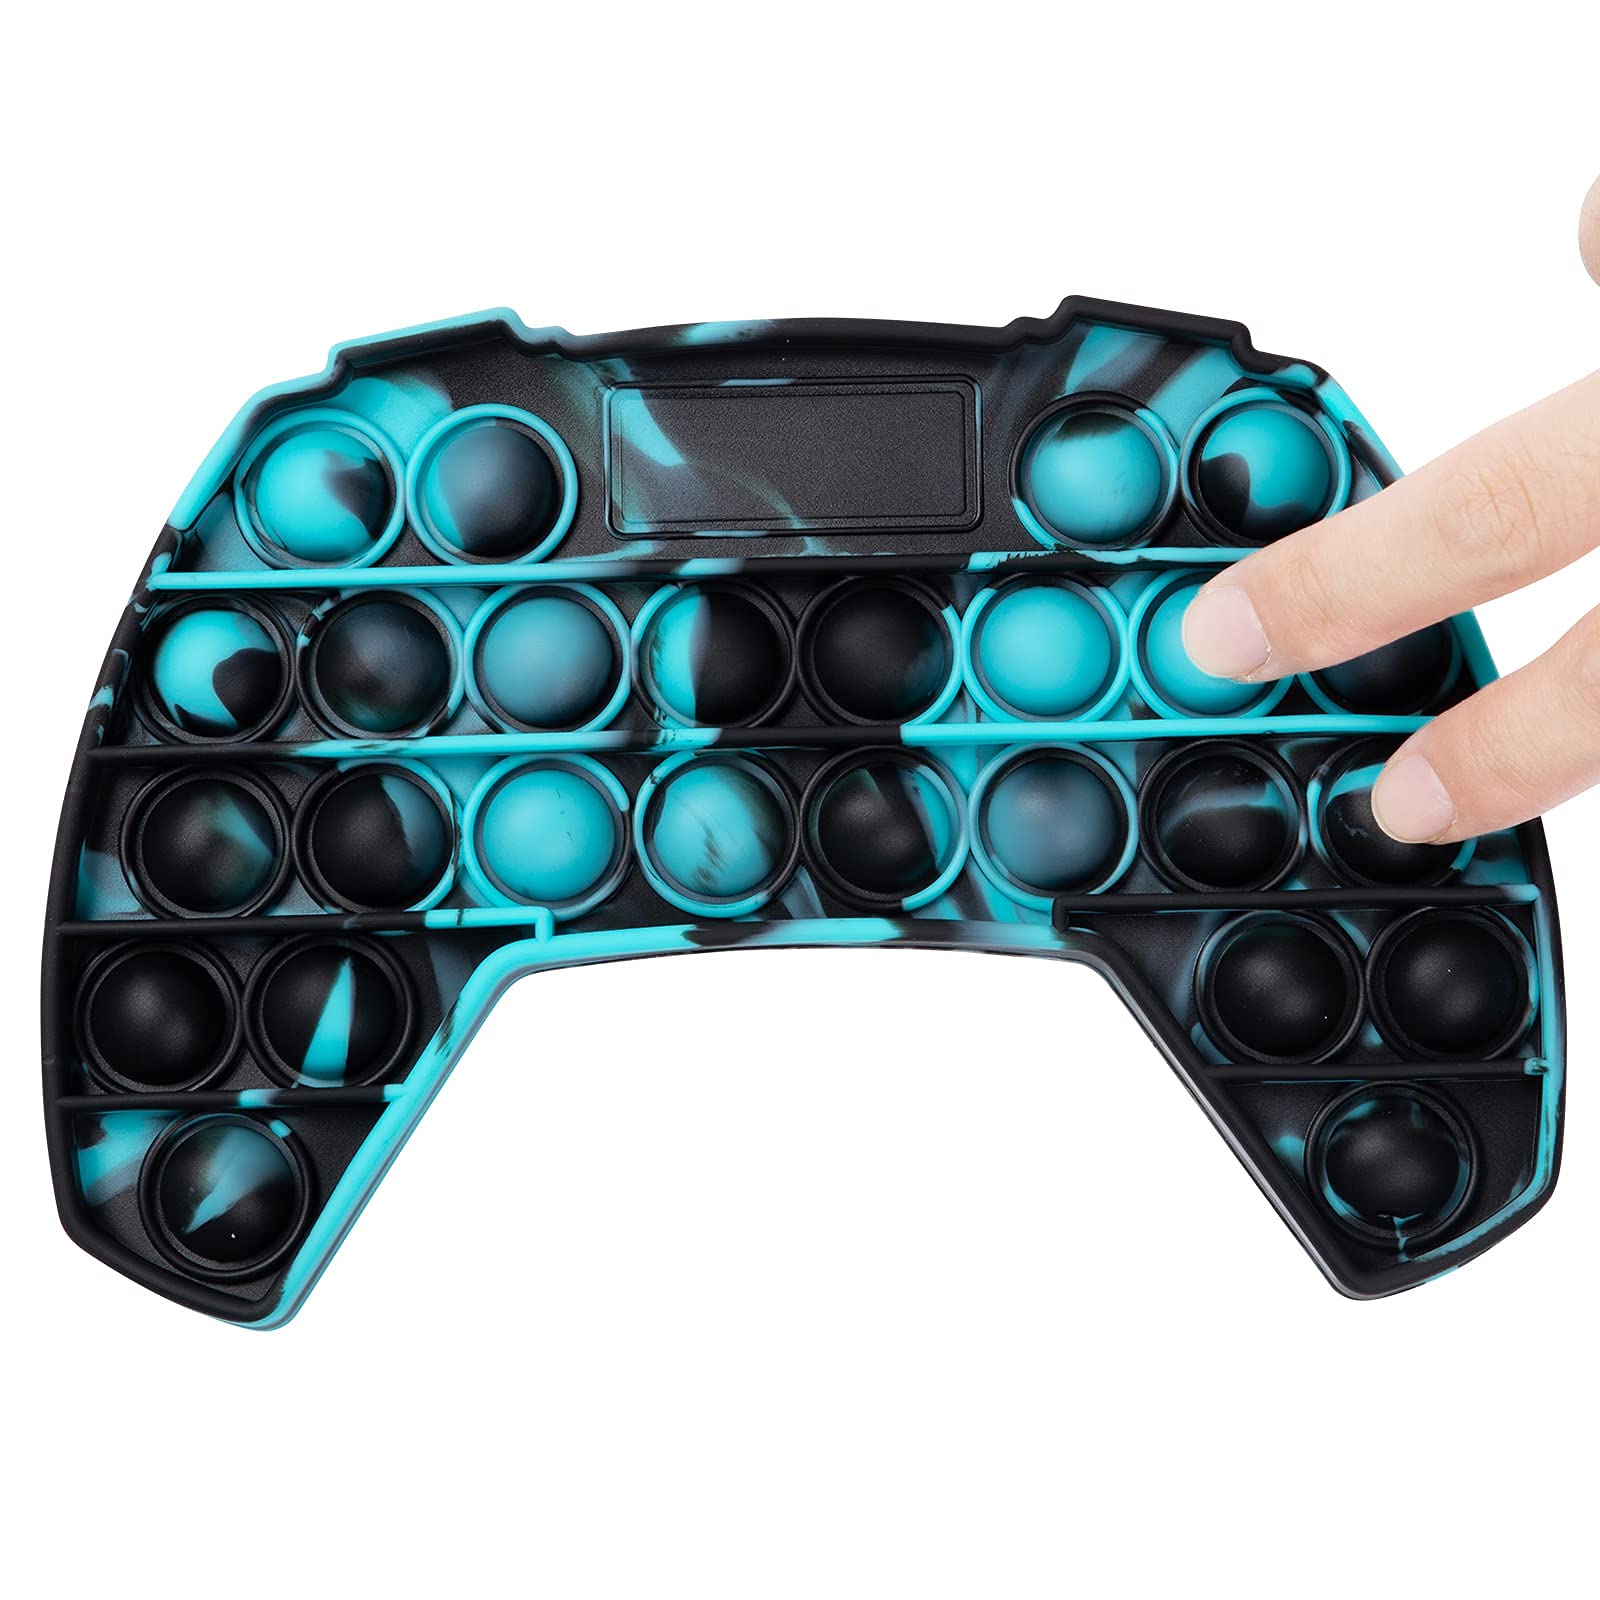 WQFXYZ Pop Push it Game Controller Shape Fidget Toy, Autism Special Needs Stress Relief, Anti-Anxiety Tie Dye Sensory Fidget Toy for Kids Adults